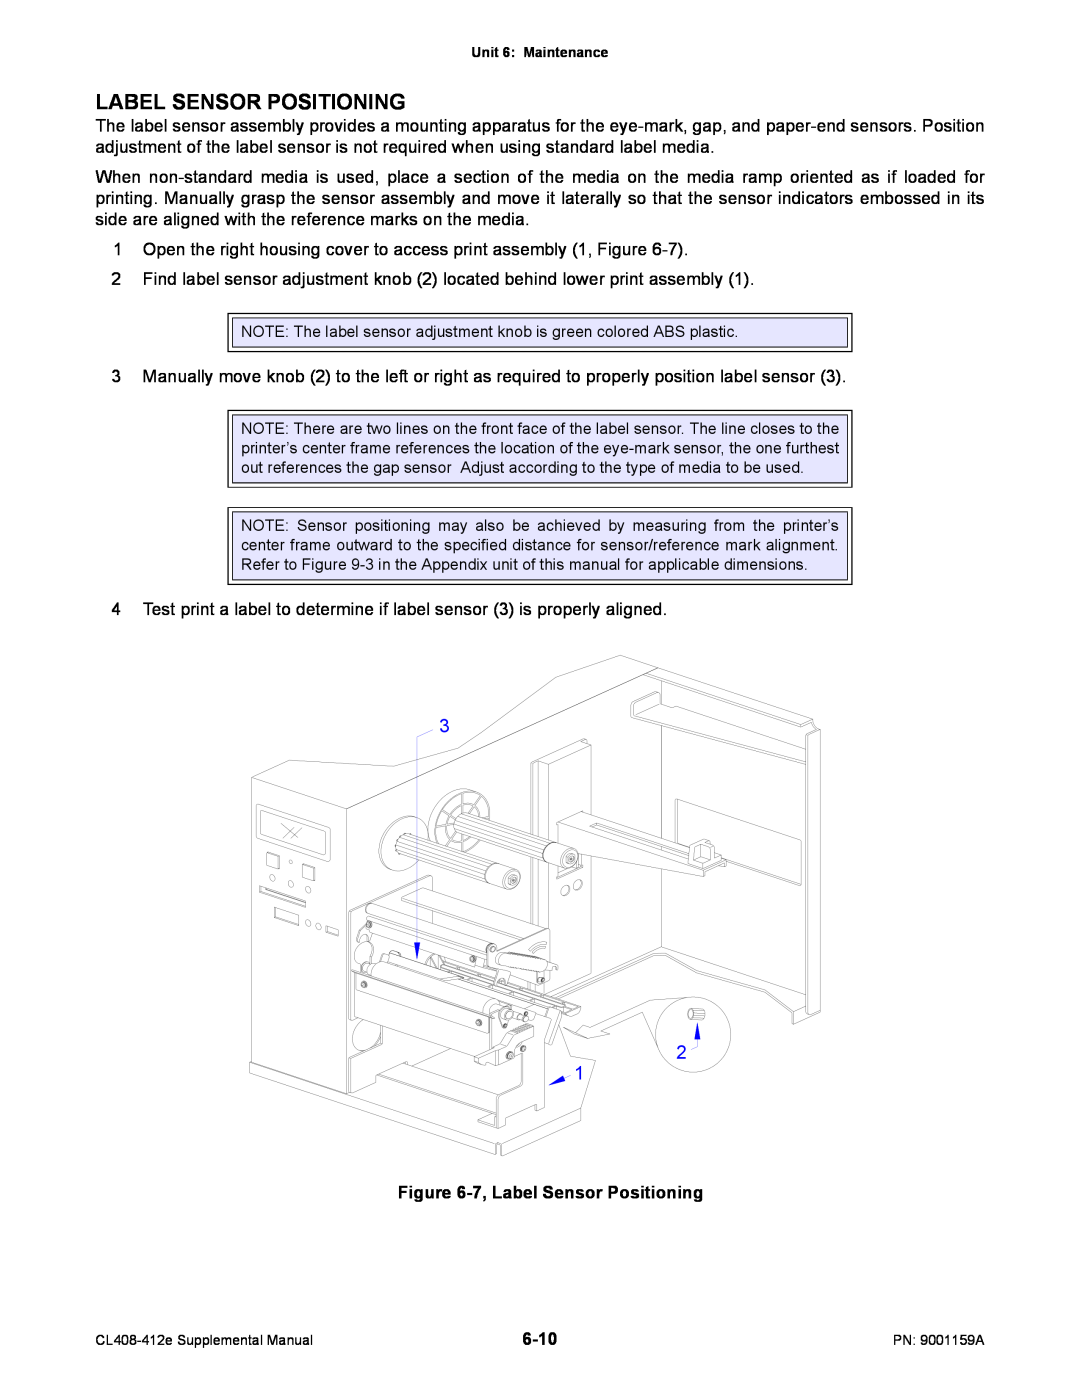 SATO CL408-412e manual 7, Label Sensor Positioning, 6-10 